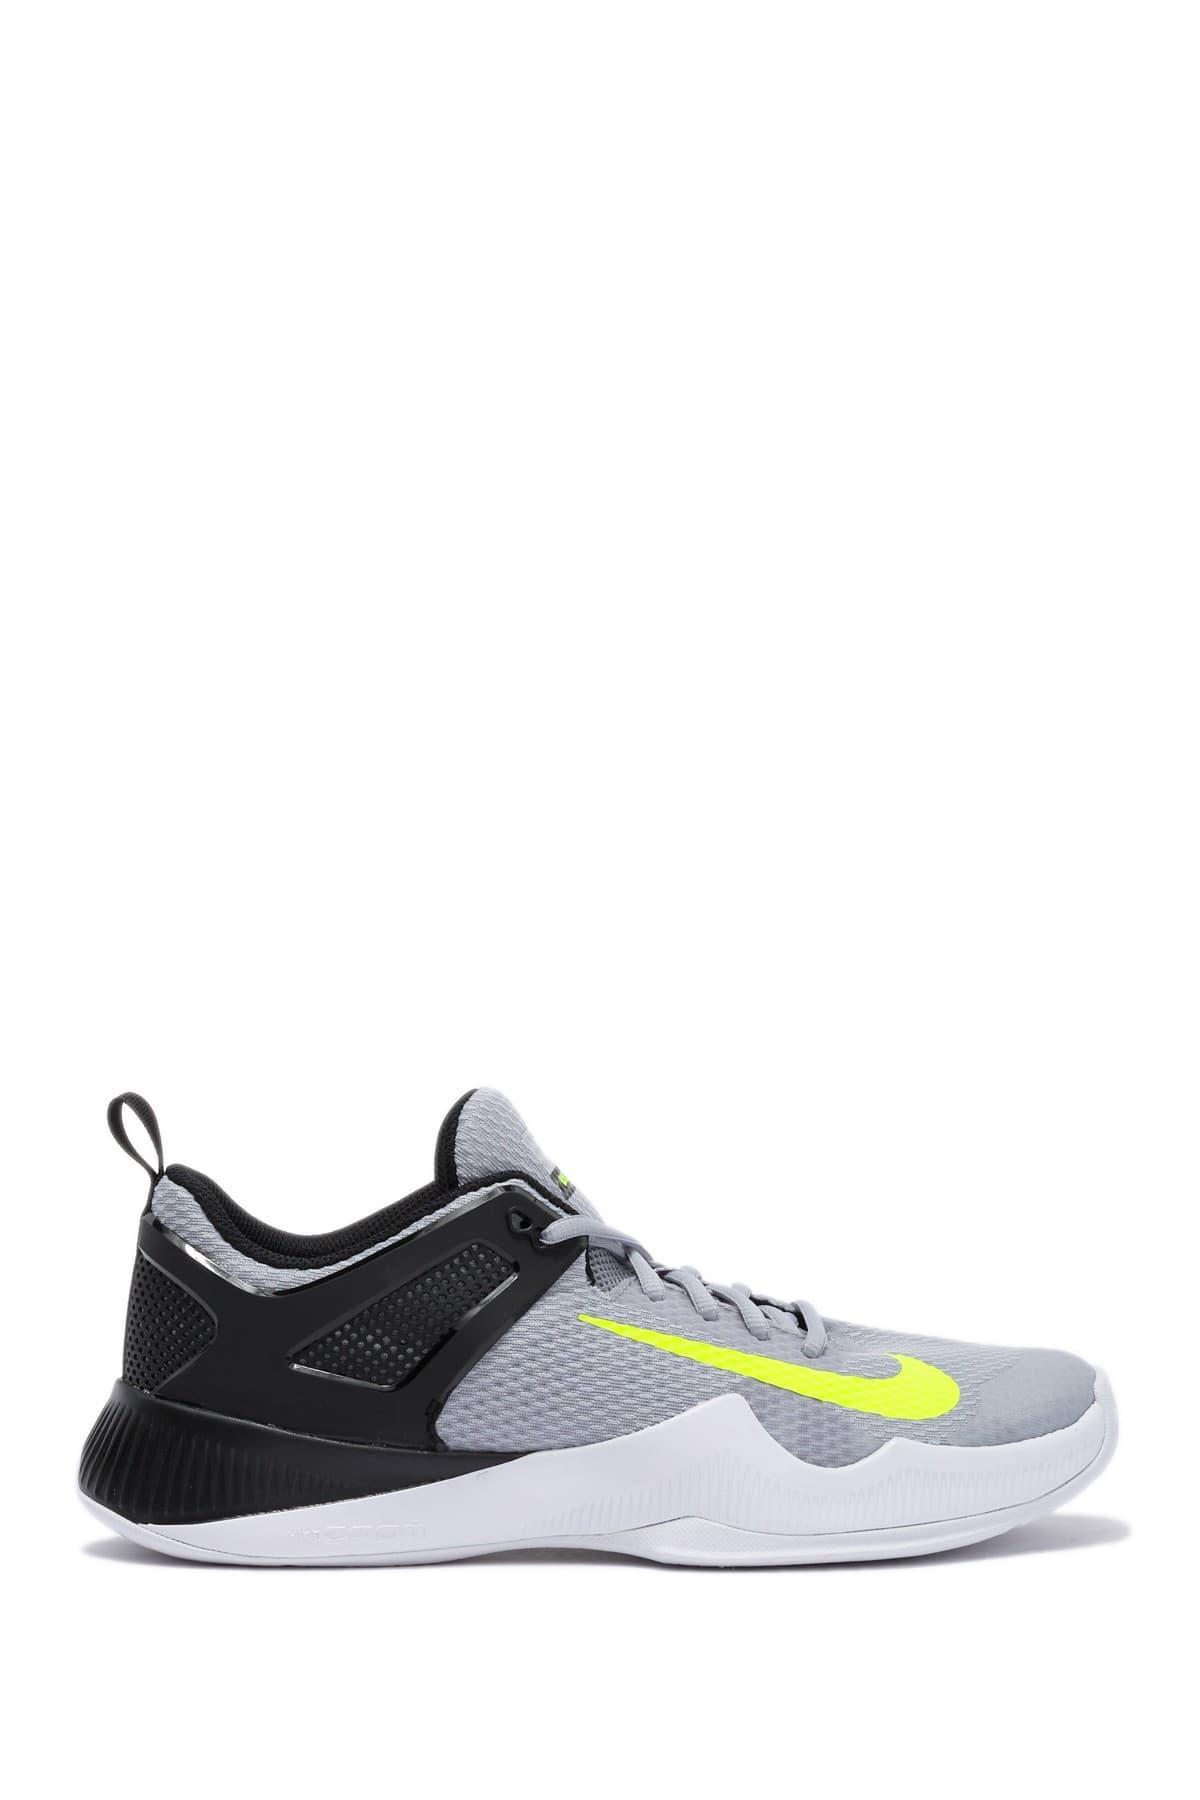 a tiempo Emborracharse Intervenir Nike Air Zoom Hyperattack Volleyball Shoe in Gray | Lyst